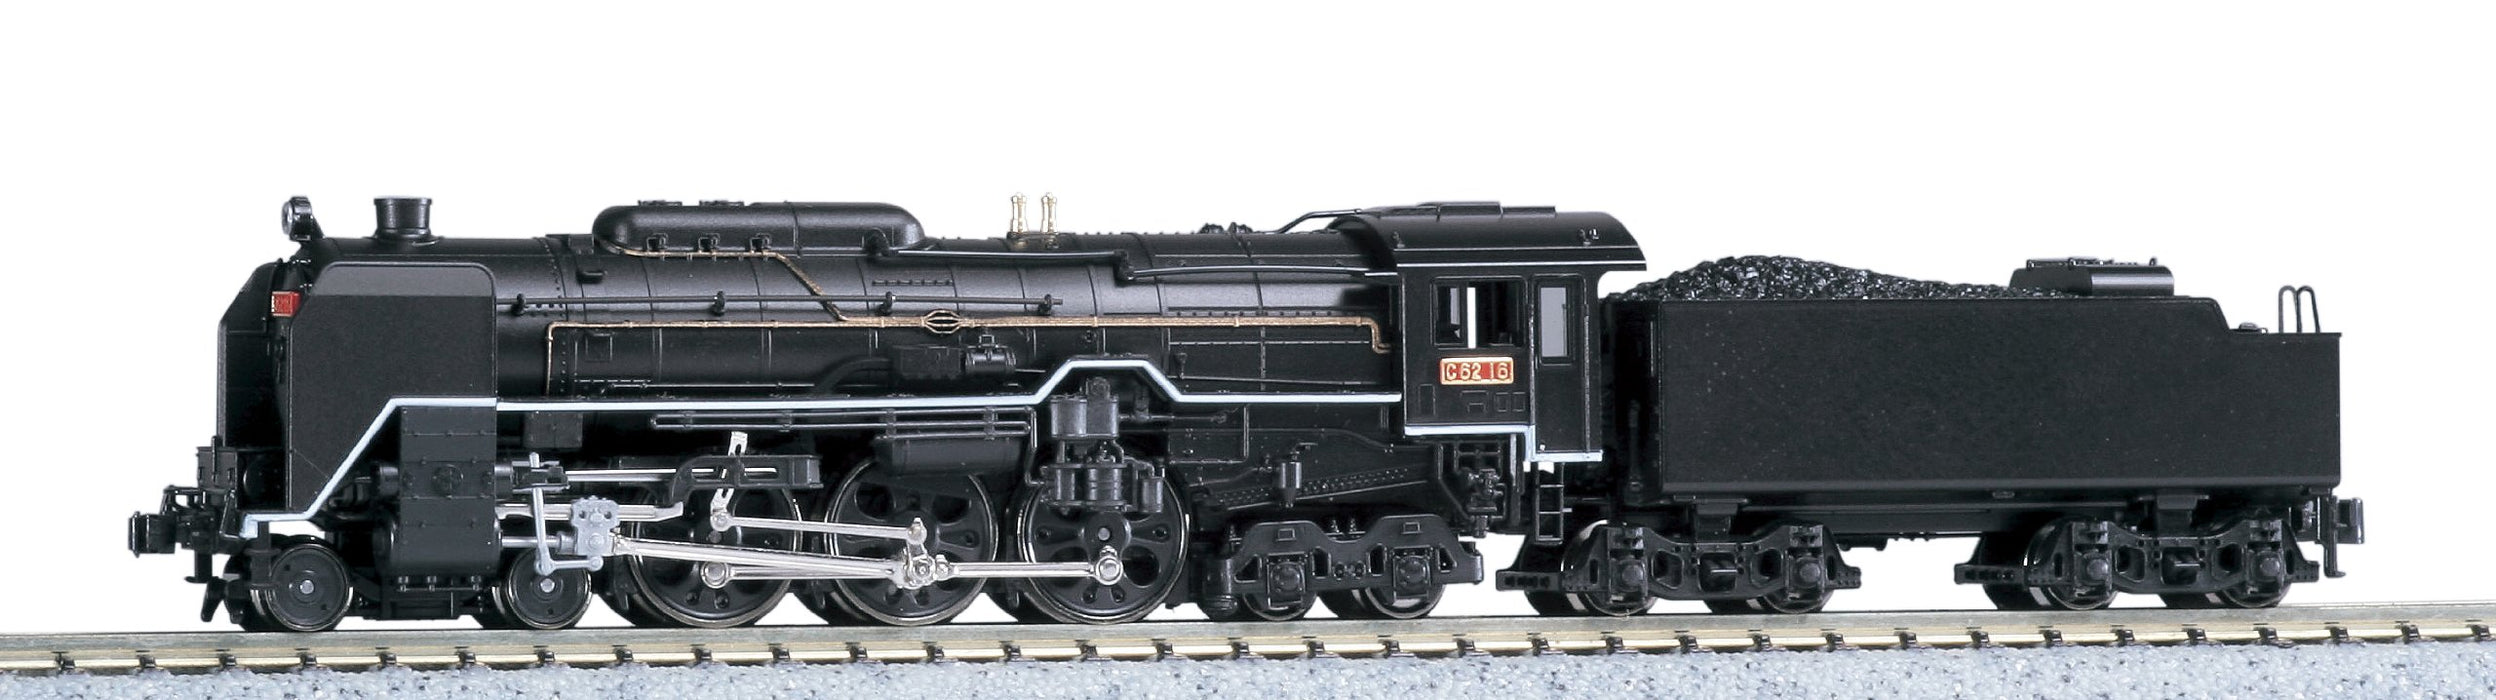 Kato N Gauge 2019-2 C62 Tokaido Steam Locomotive Railway Model